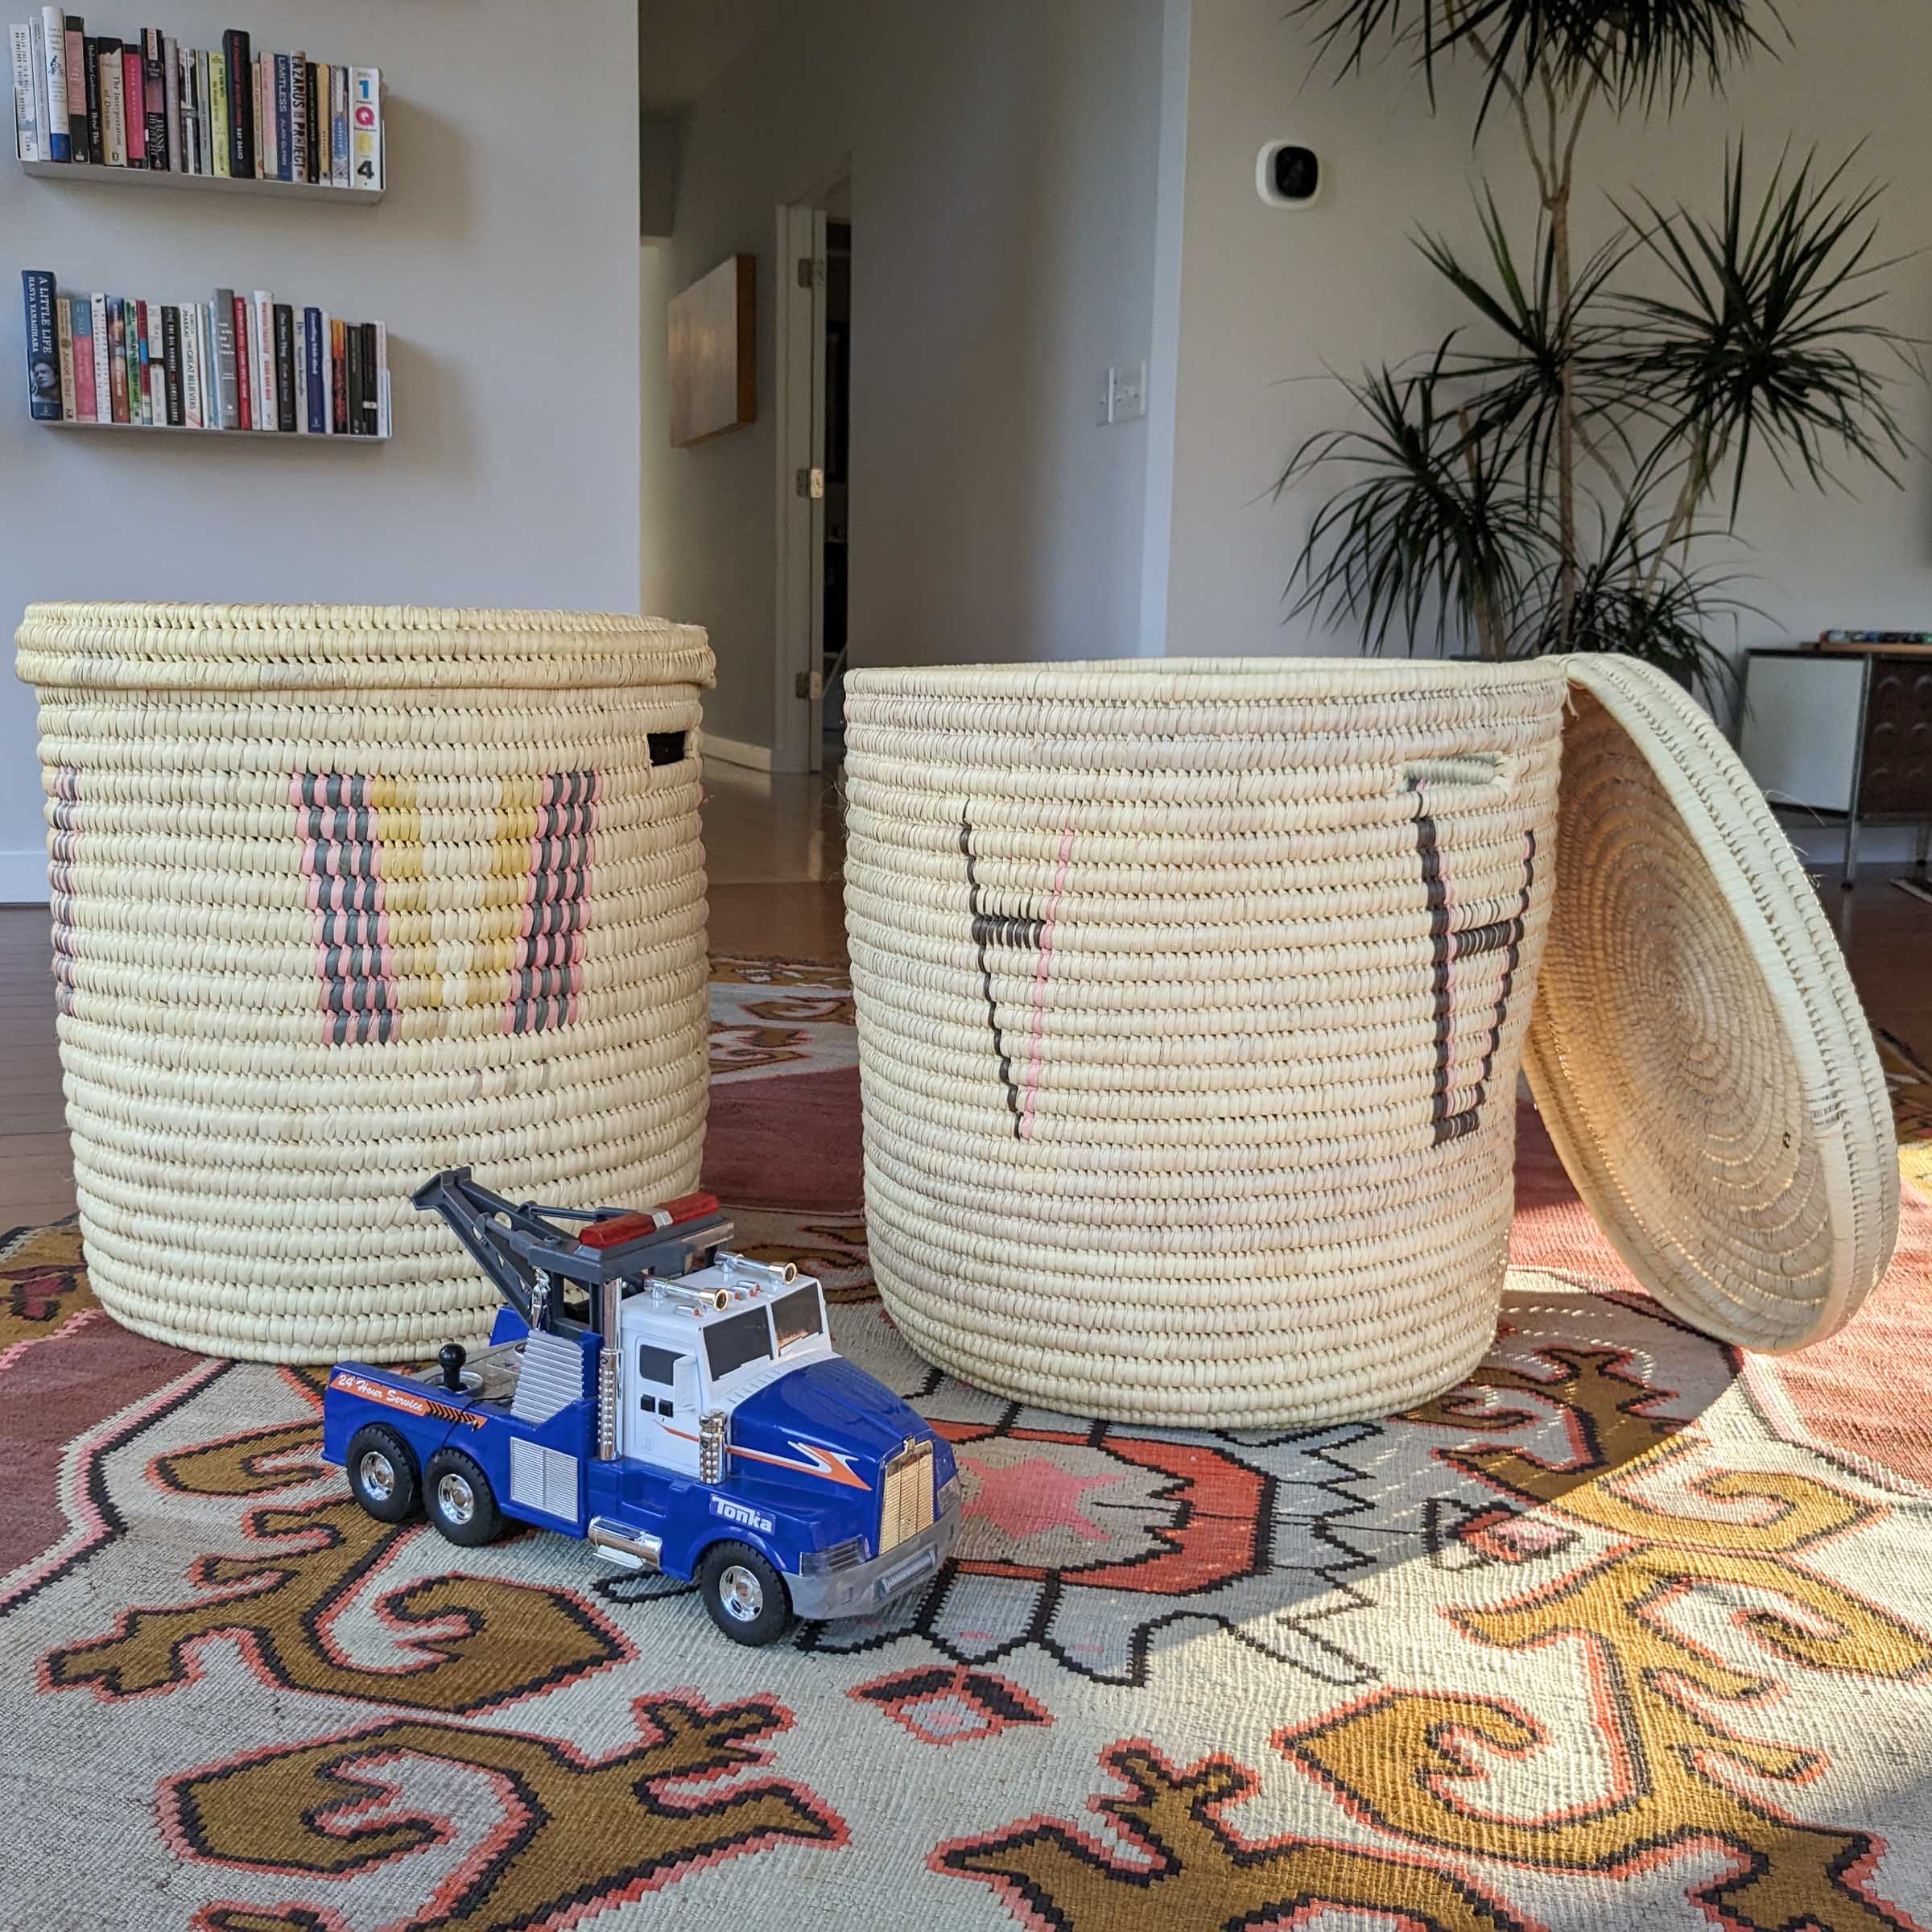 Palm Laundry Basket